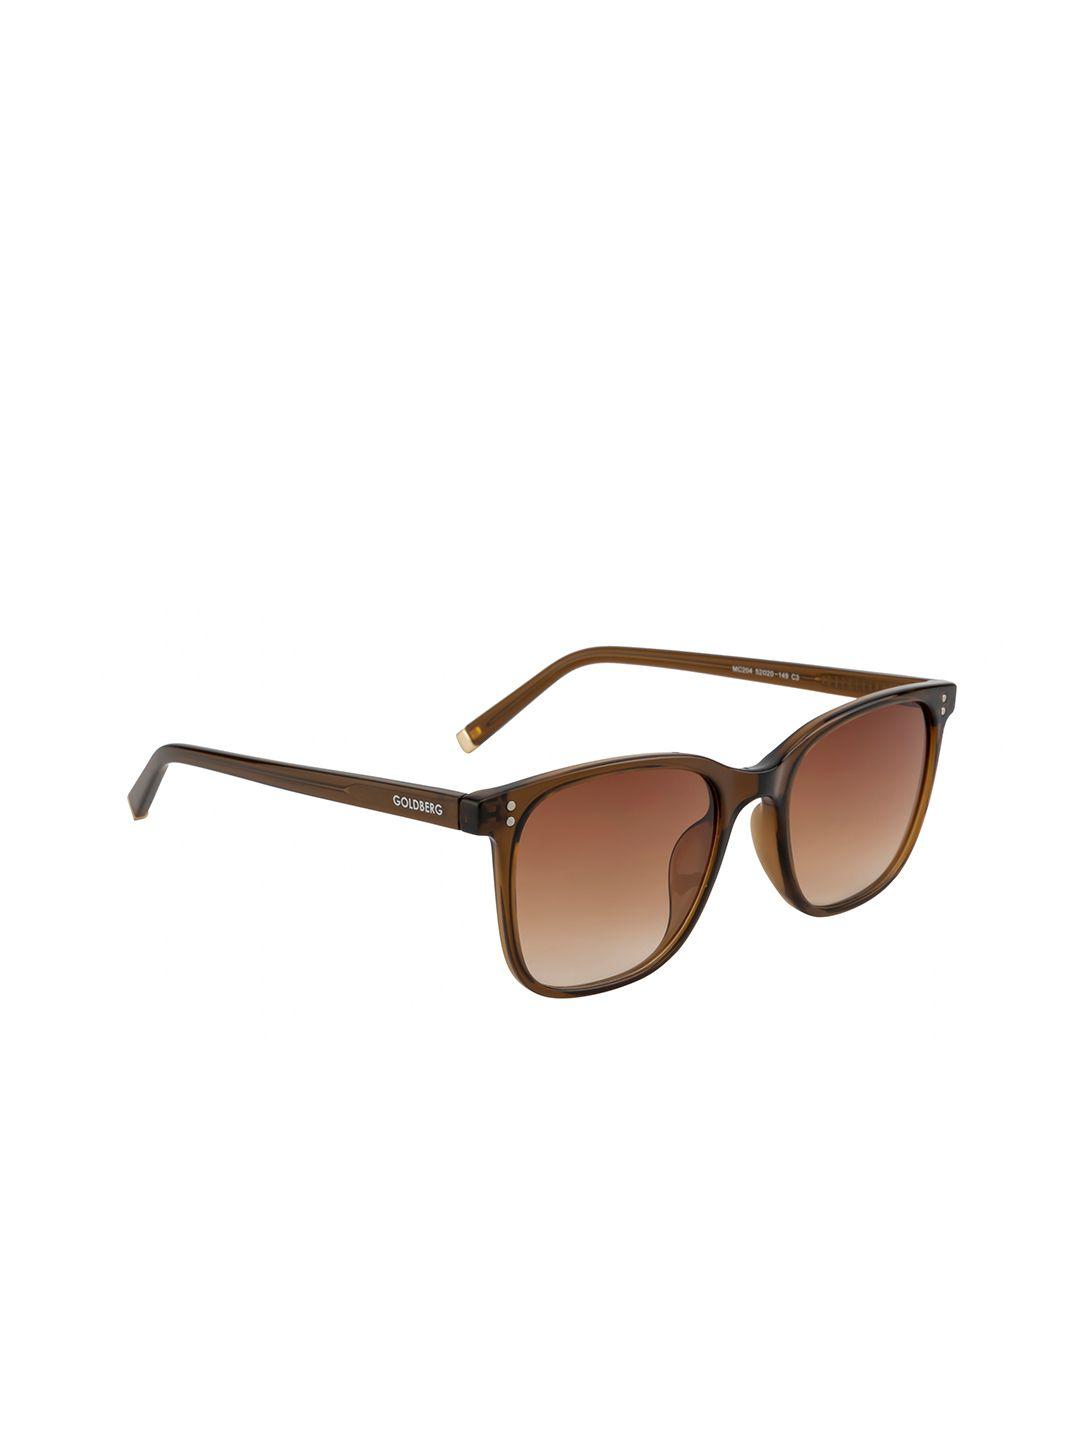 gold berg unisex brown lens & brown wayfarer sunglasses with uv protected lens